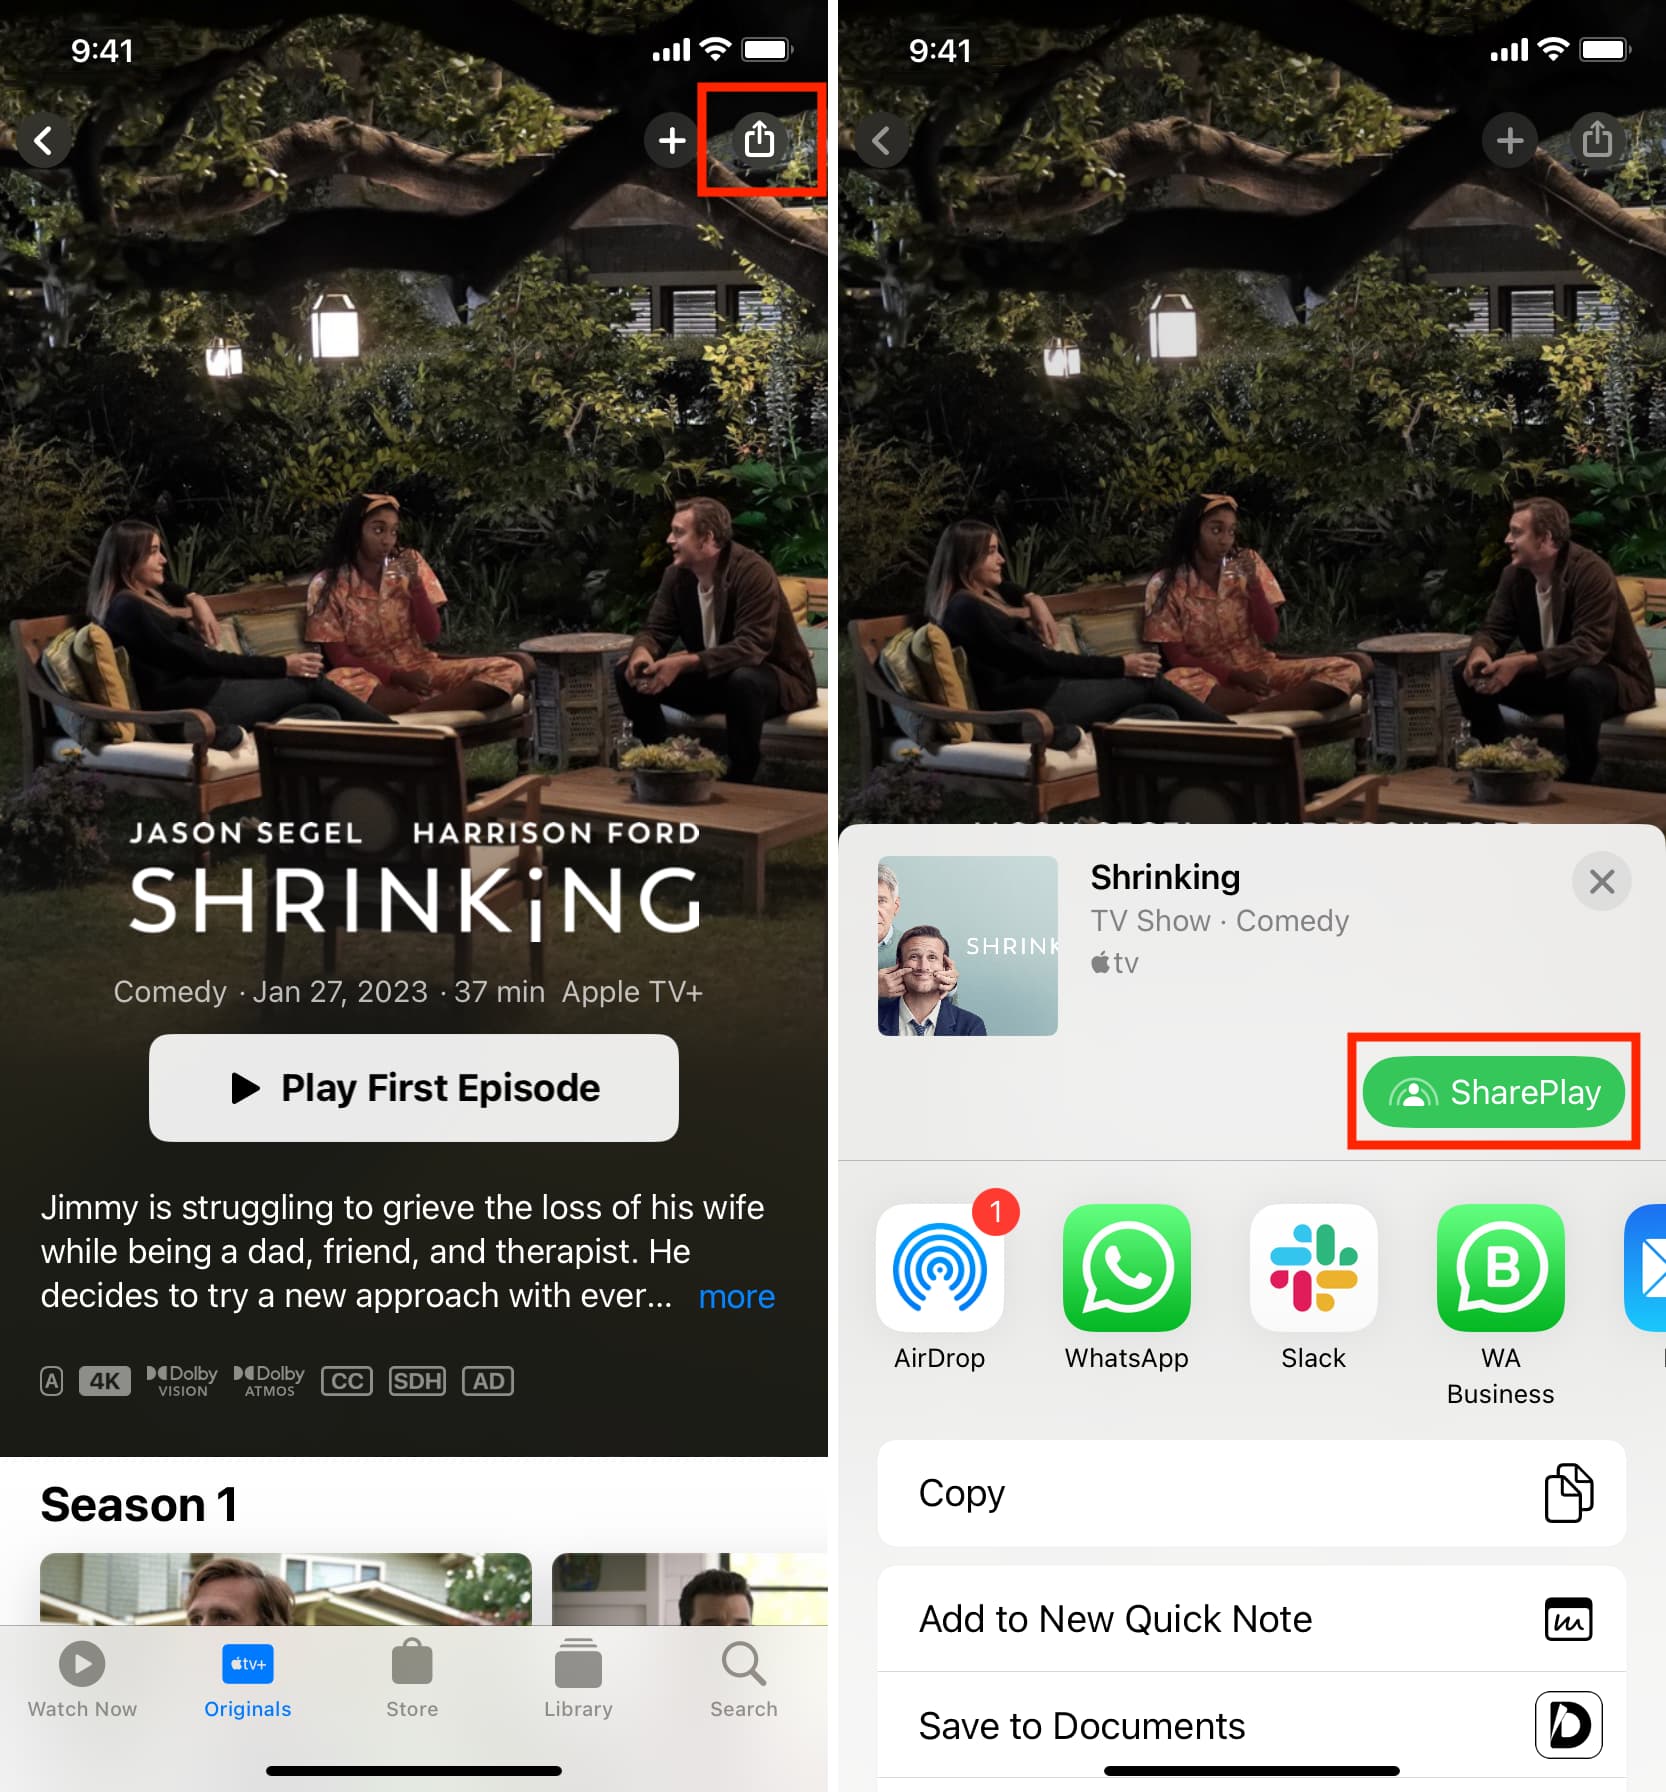 SharePlay from iPhone Apple TV app